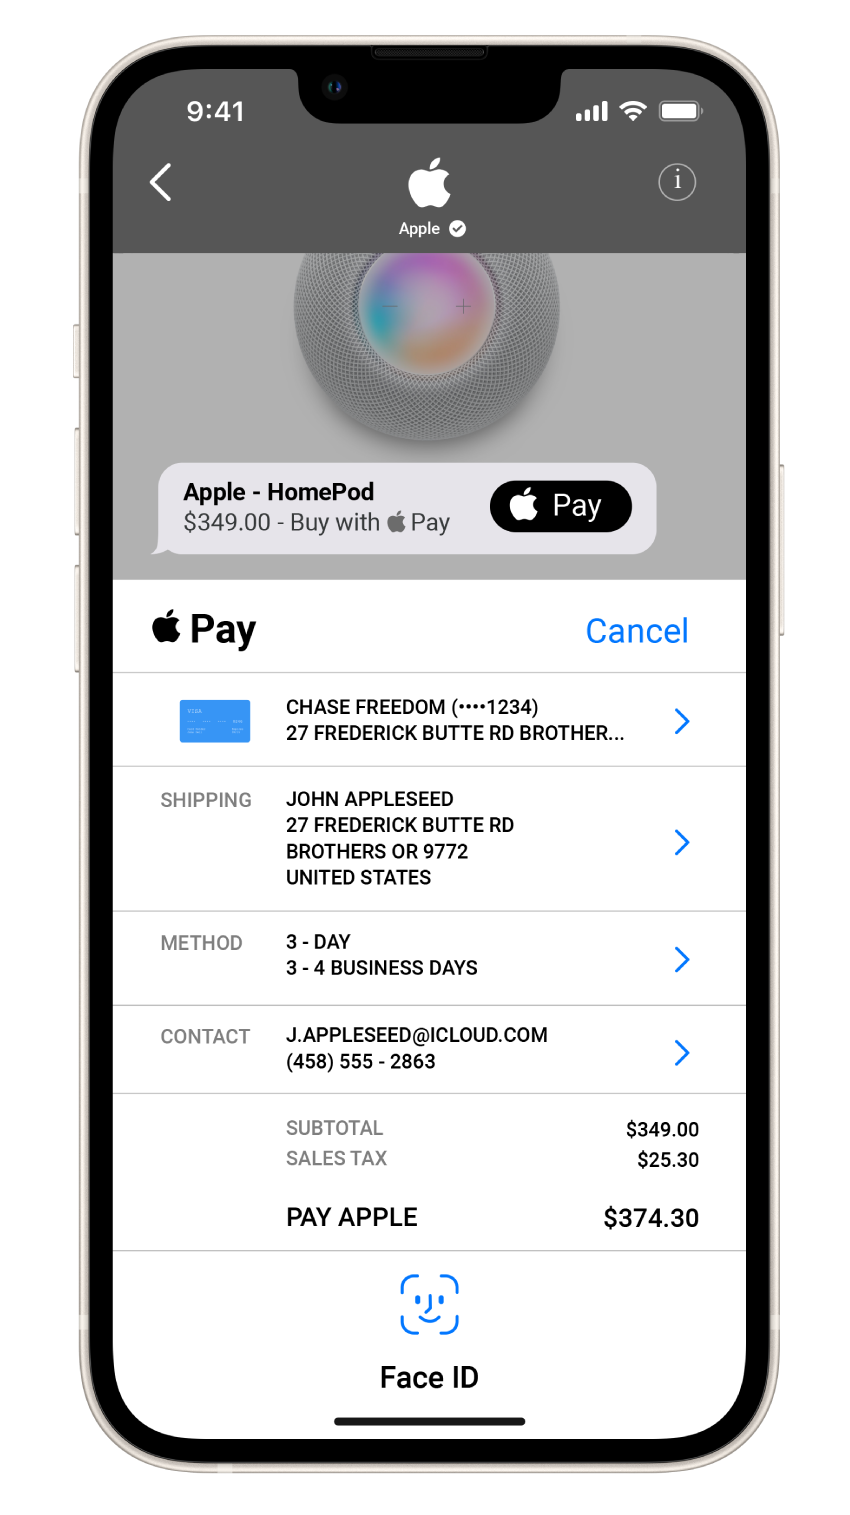 Apple pay - optional integration